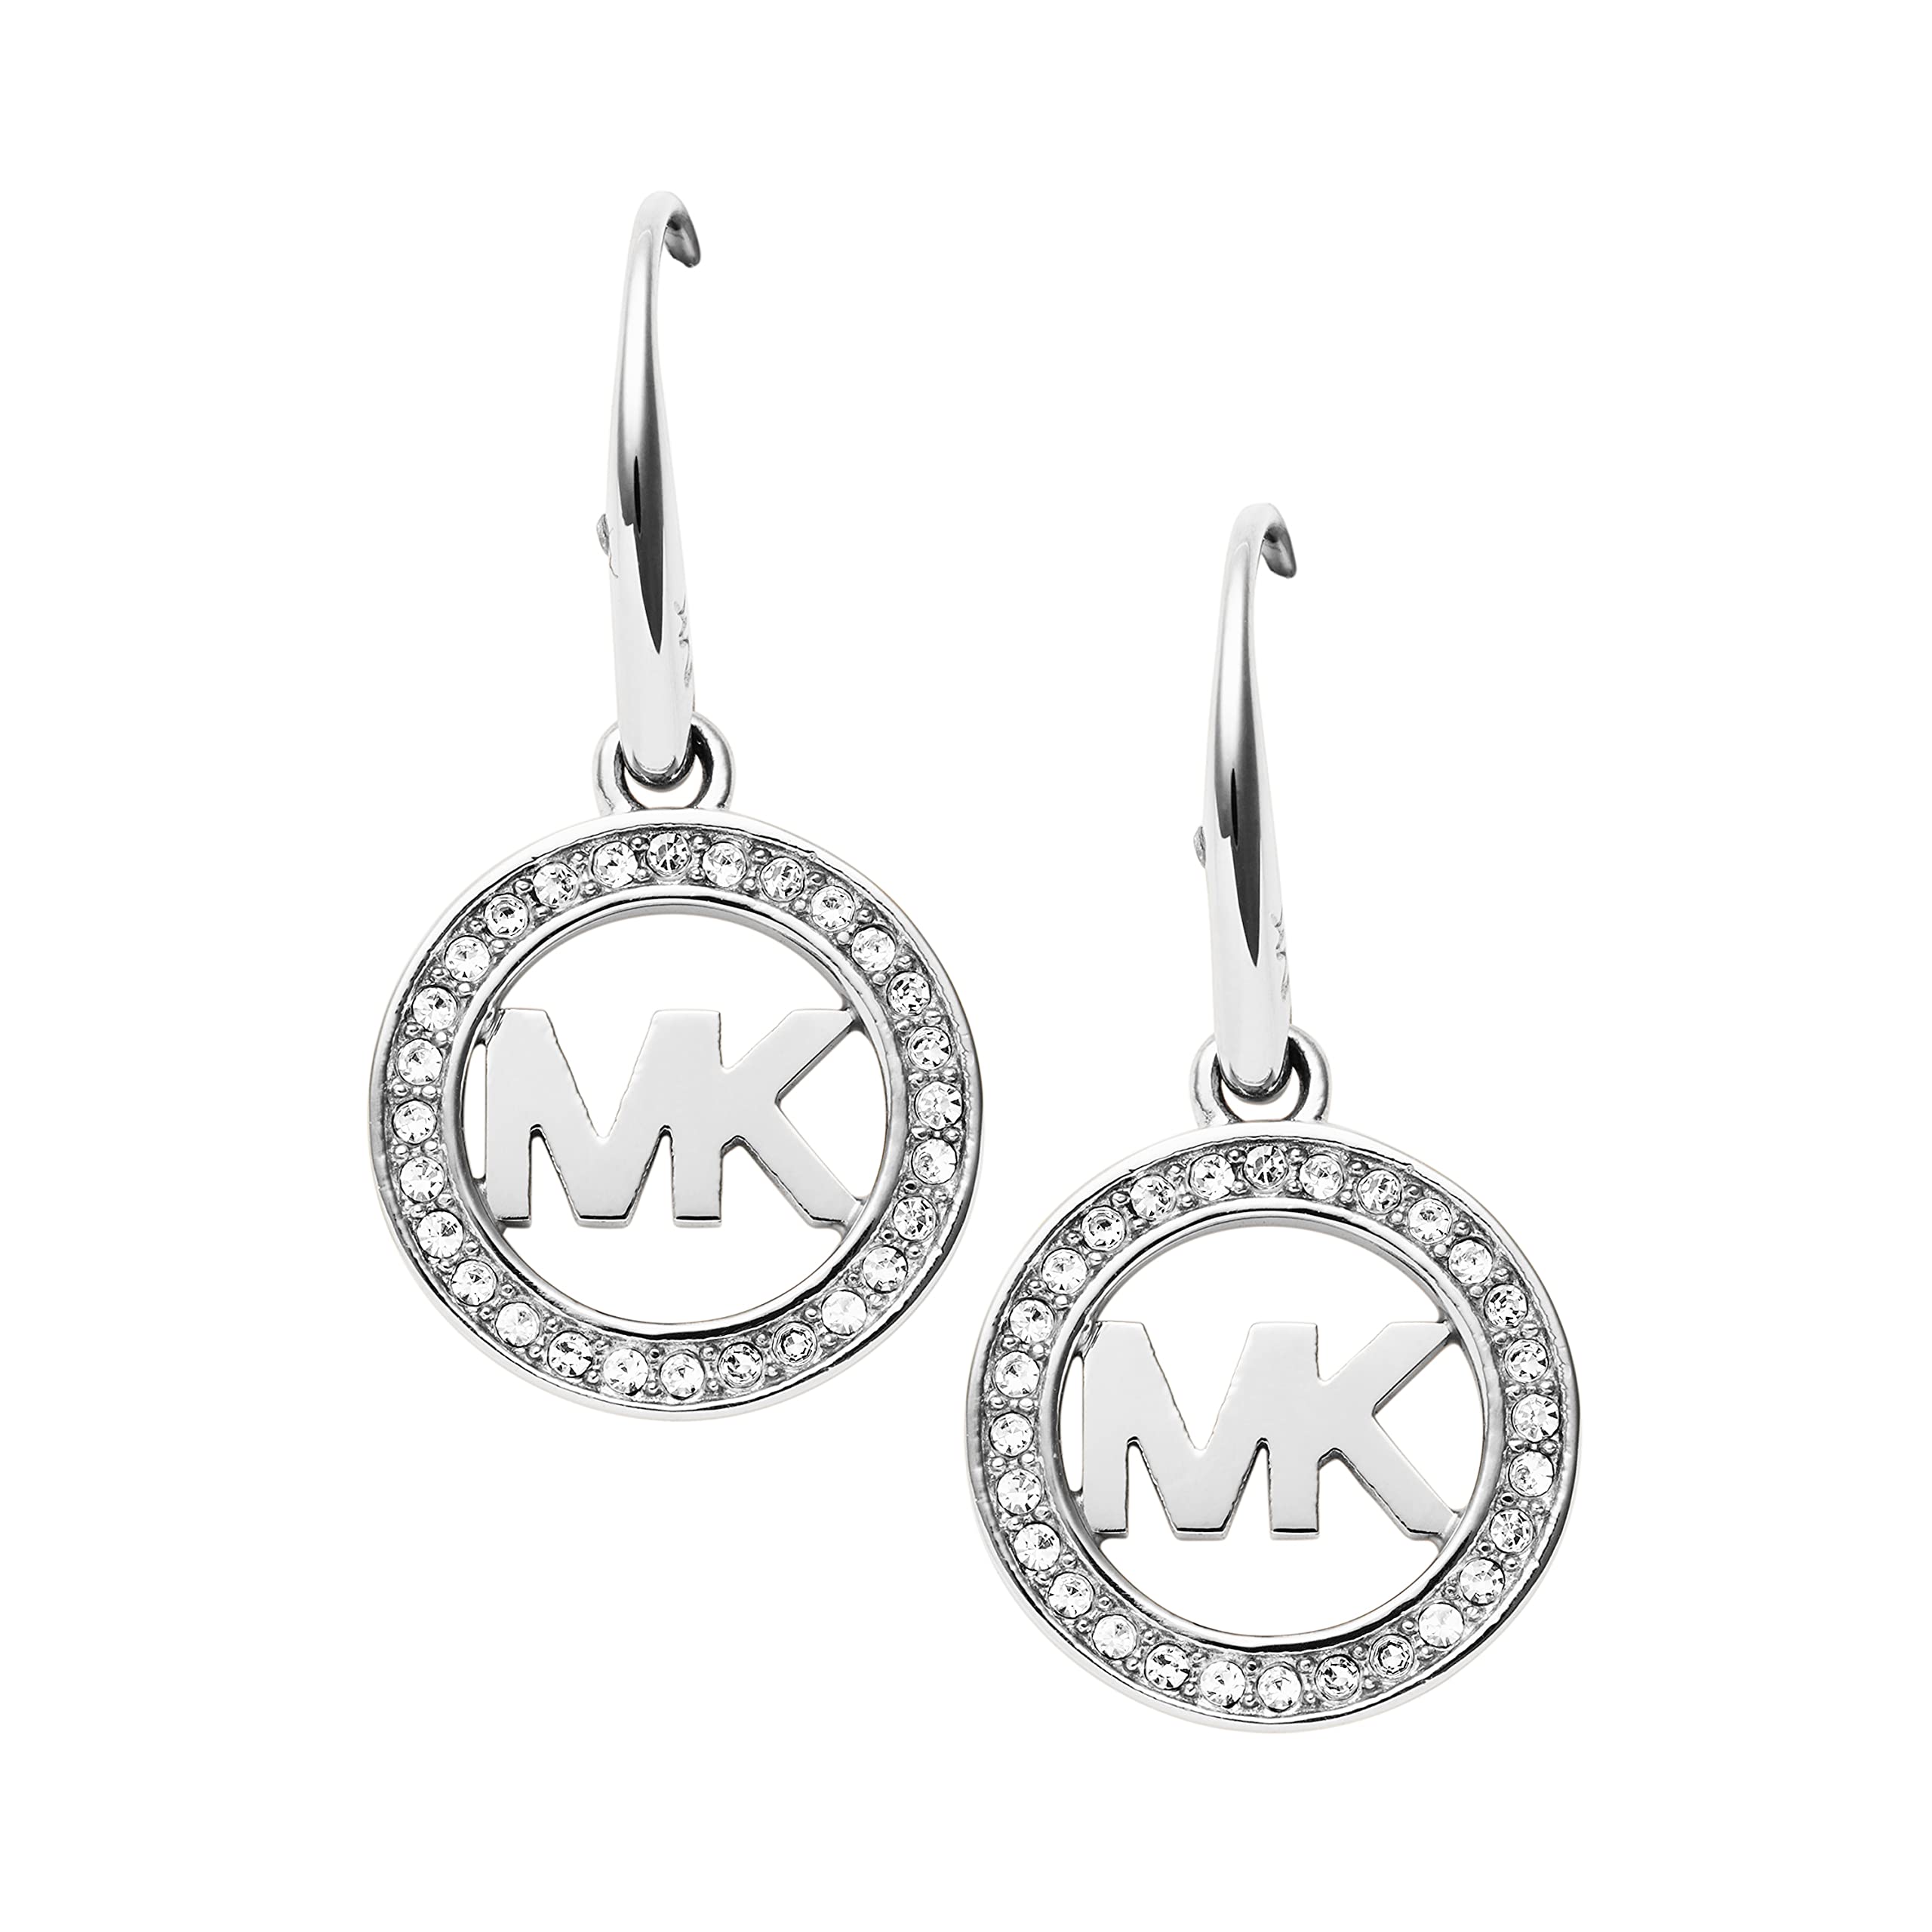 Mua Michael Kors Womens GoldTone Stainless Steel Logo Hoop Earrings  Model MKJ7992710 trên Amazon Mỹ chính hãng 2023  Giaonhan247